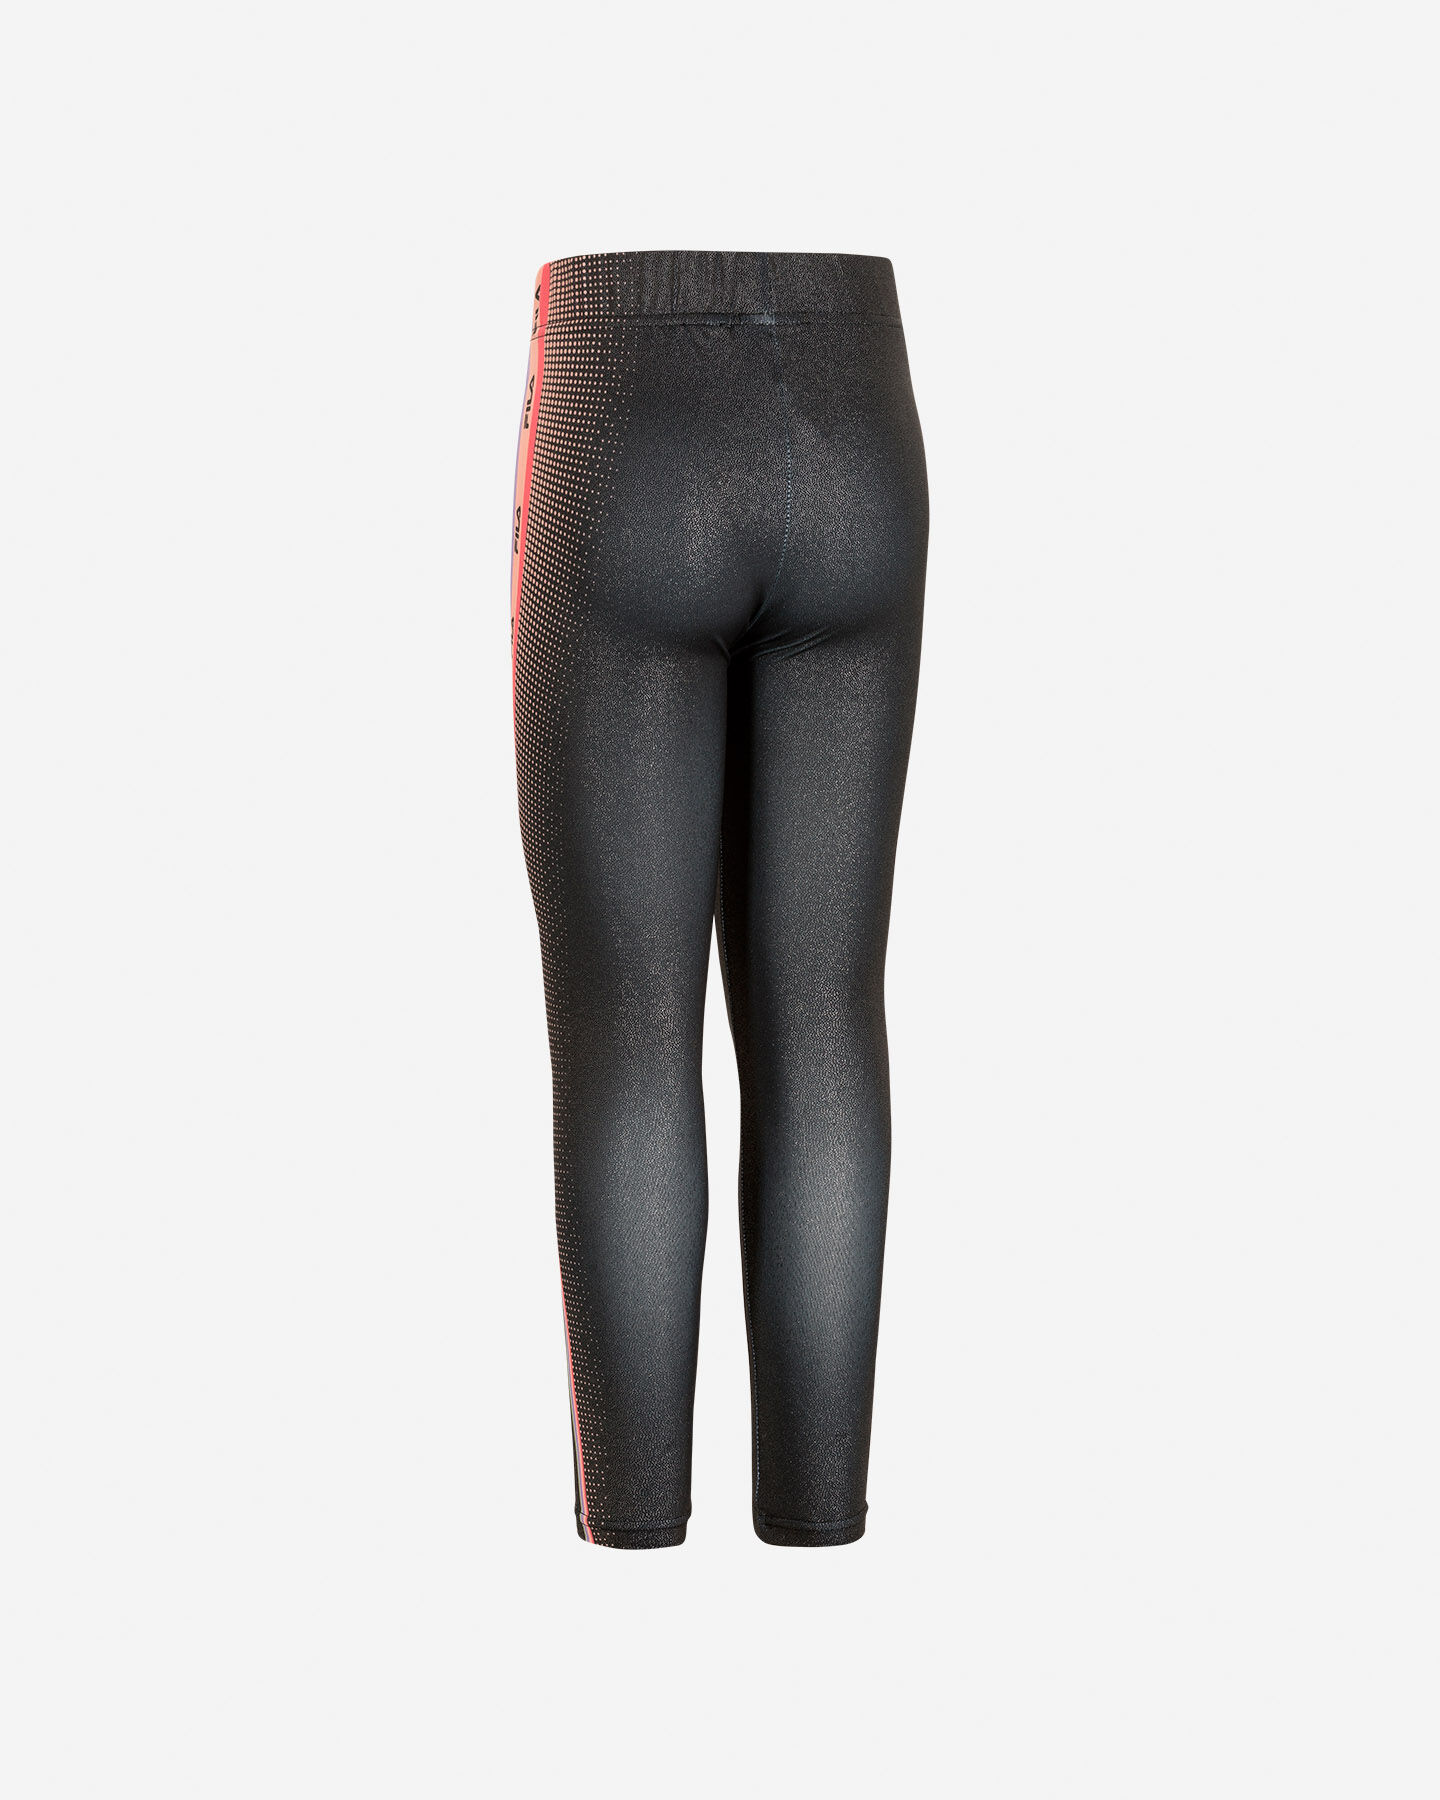  Pantalone FILA GRAPHICS LOGO LINEA JR S4100809|050|6A scatto 1